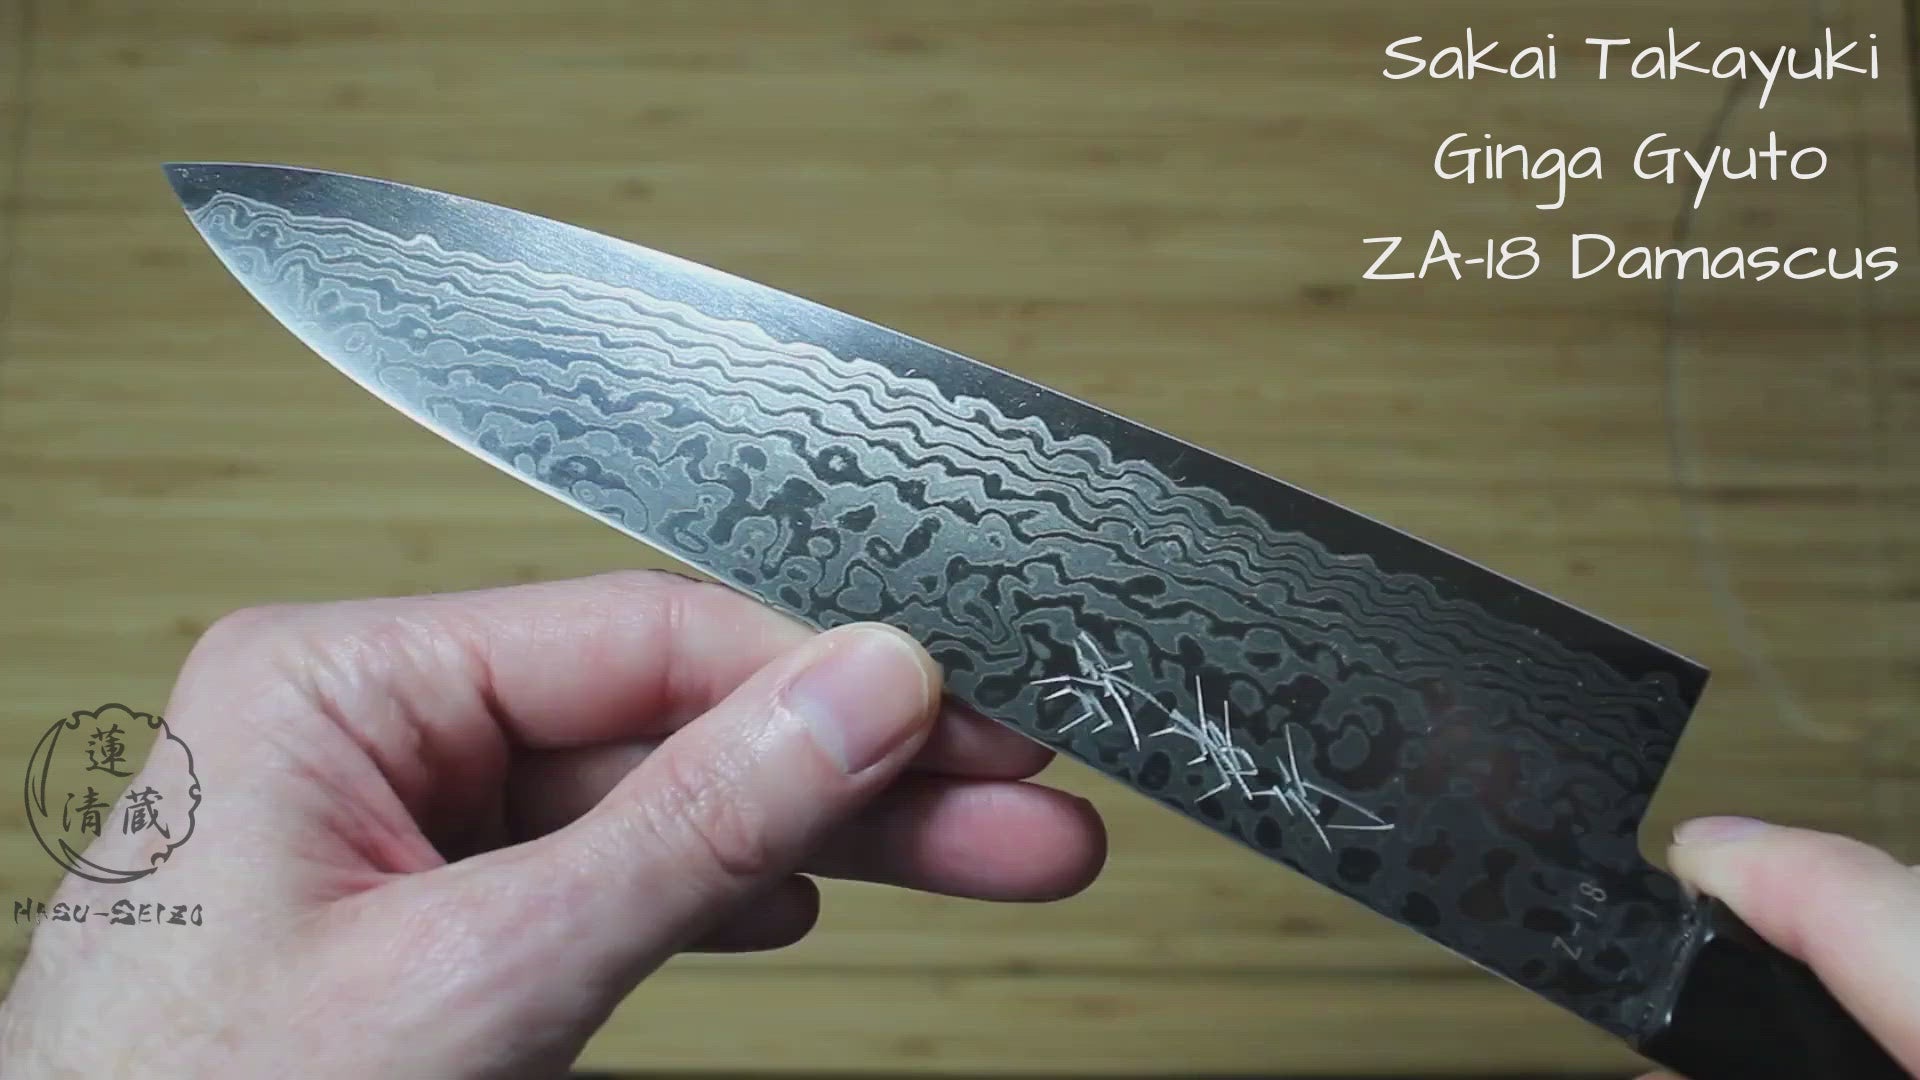 Gyuto Japanese Chef Knife 210mm (8.3") / 240mm (9.4") Damascus 69 Layer -Ginga Sakai Takayuki by Hasu-Seizo